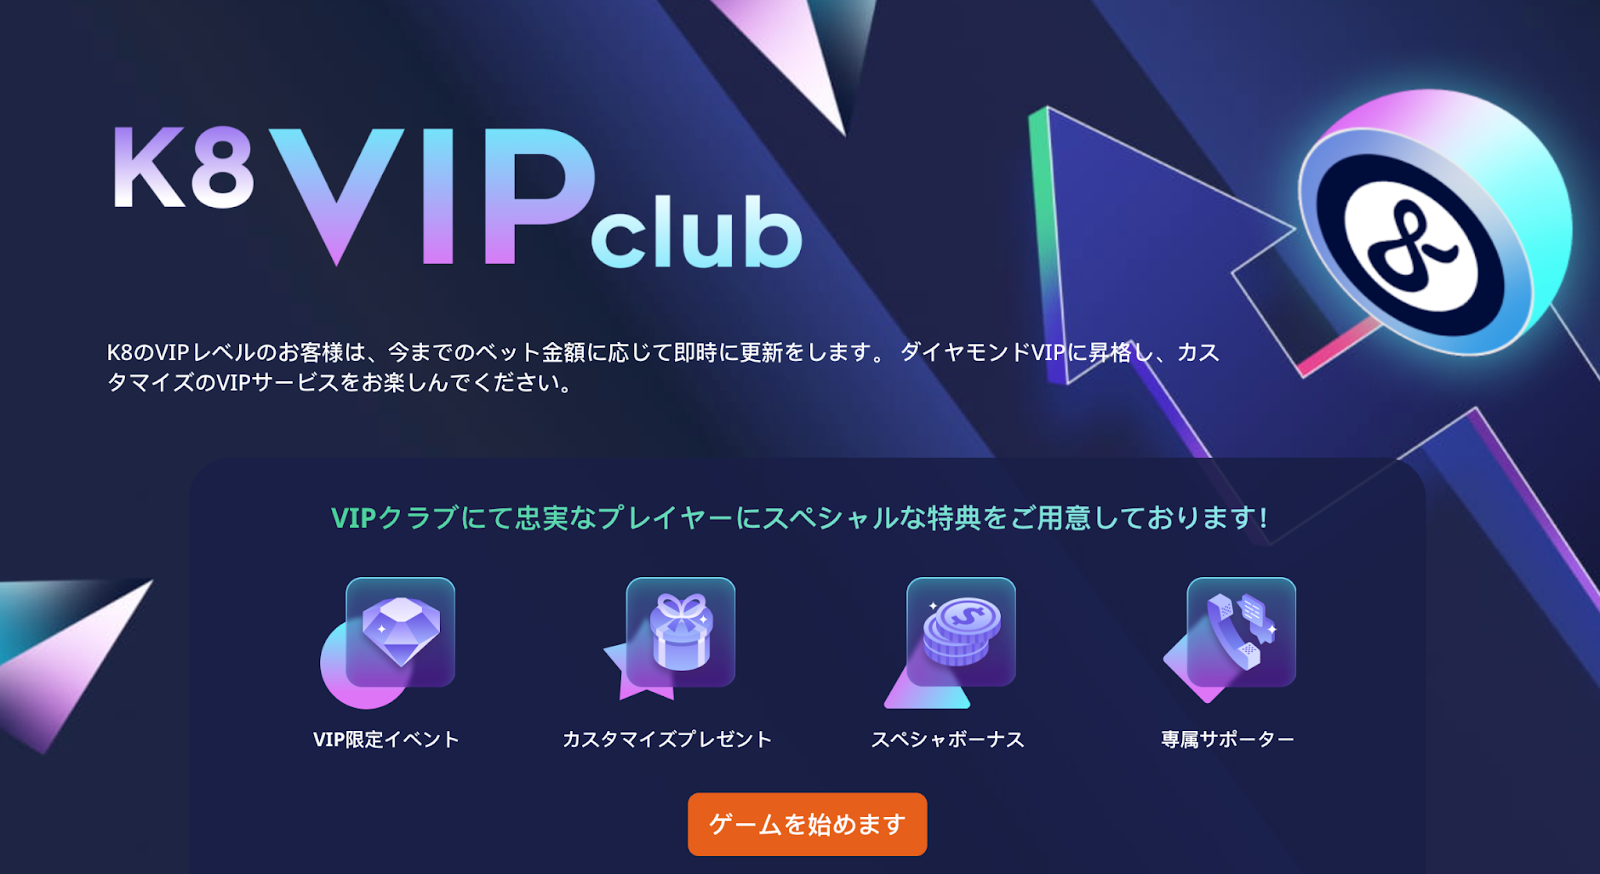 k8 vip club